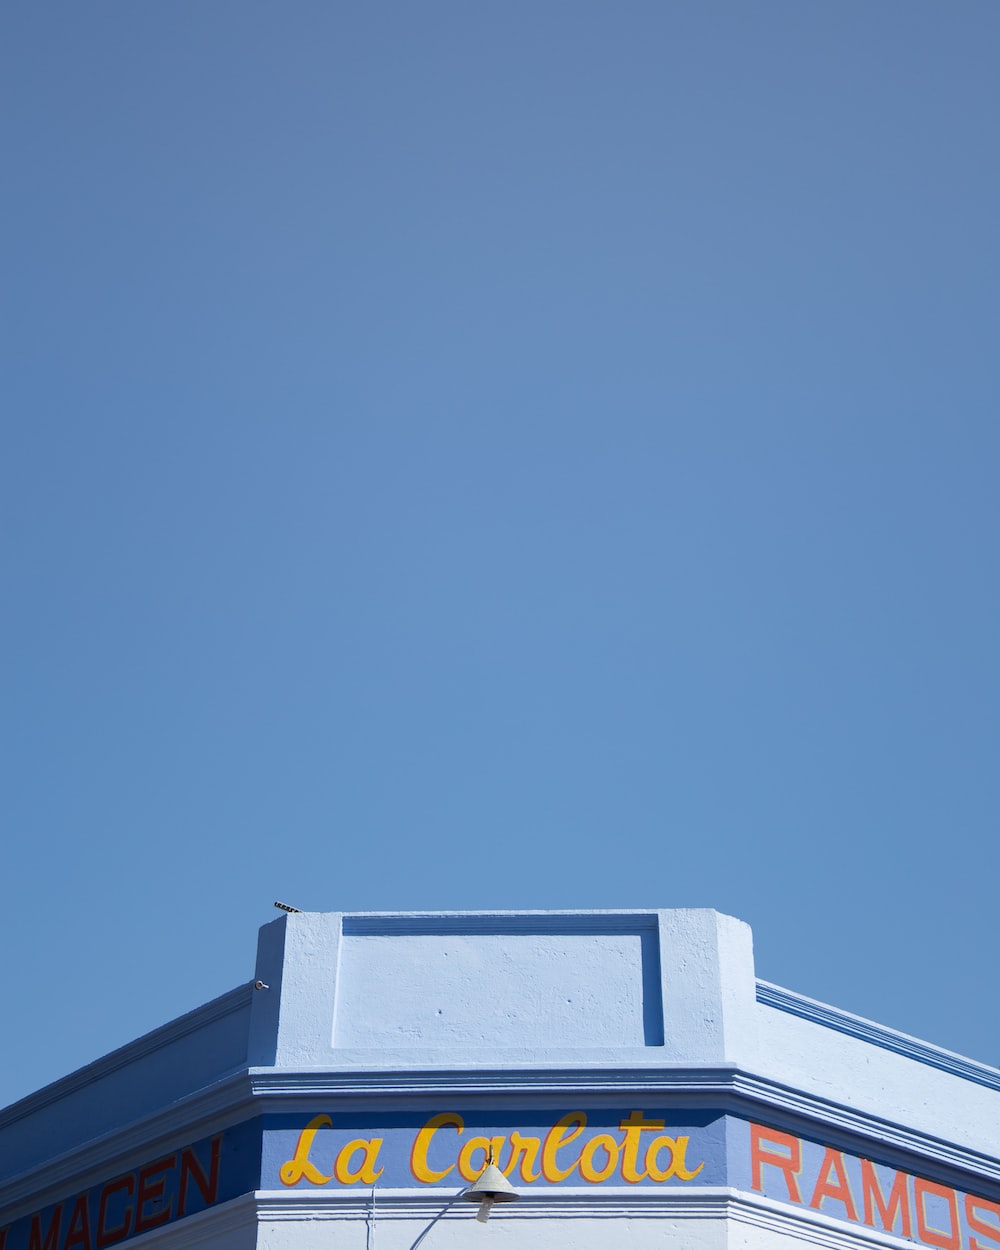 La Carlota building under blue sky during daytime